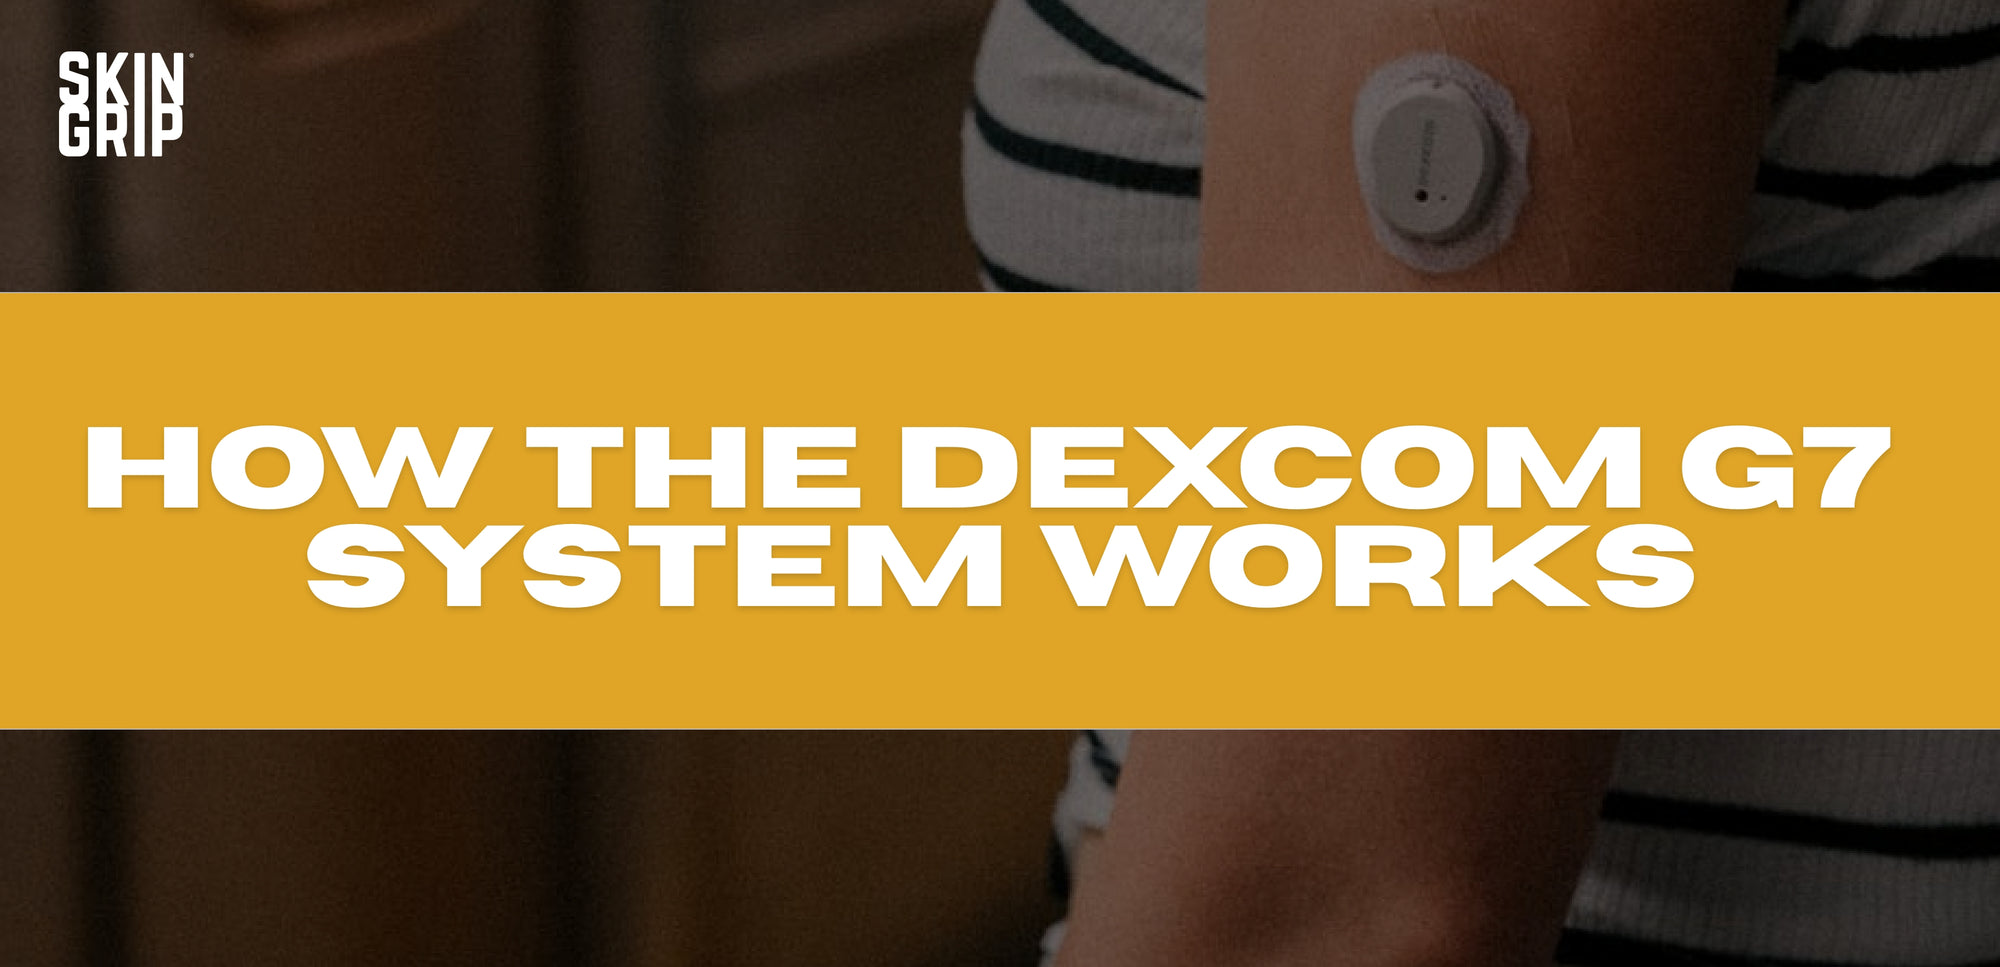 How the Dexcom G7 System Works